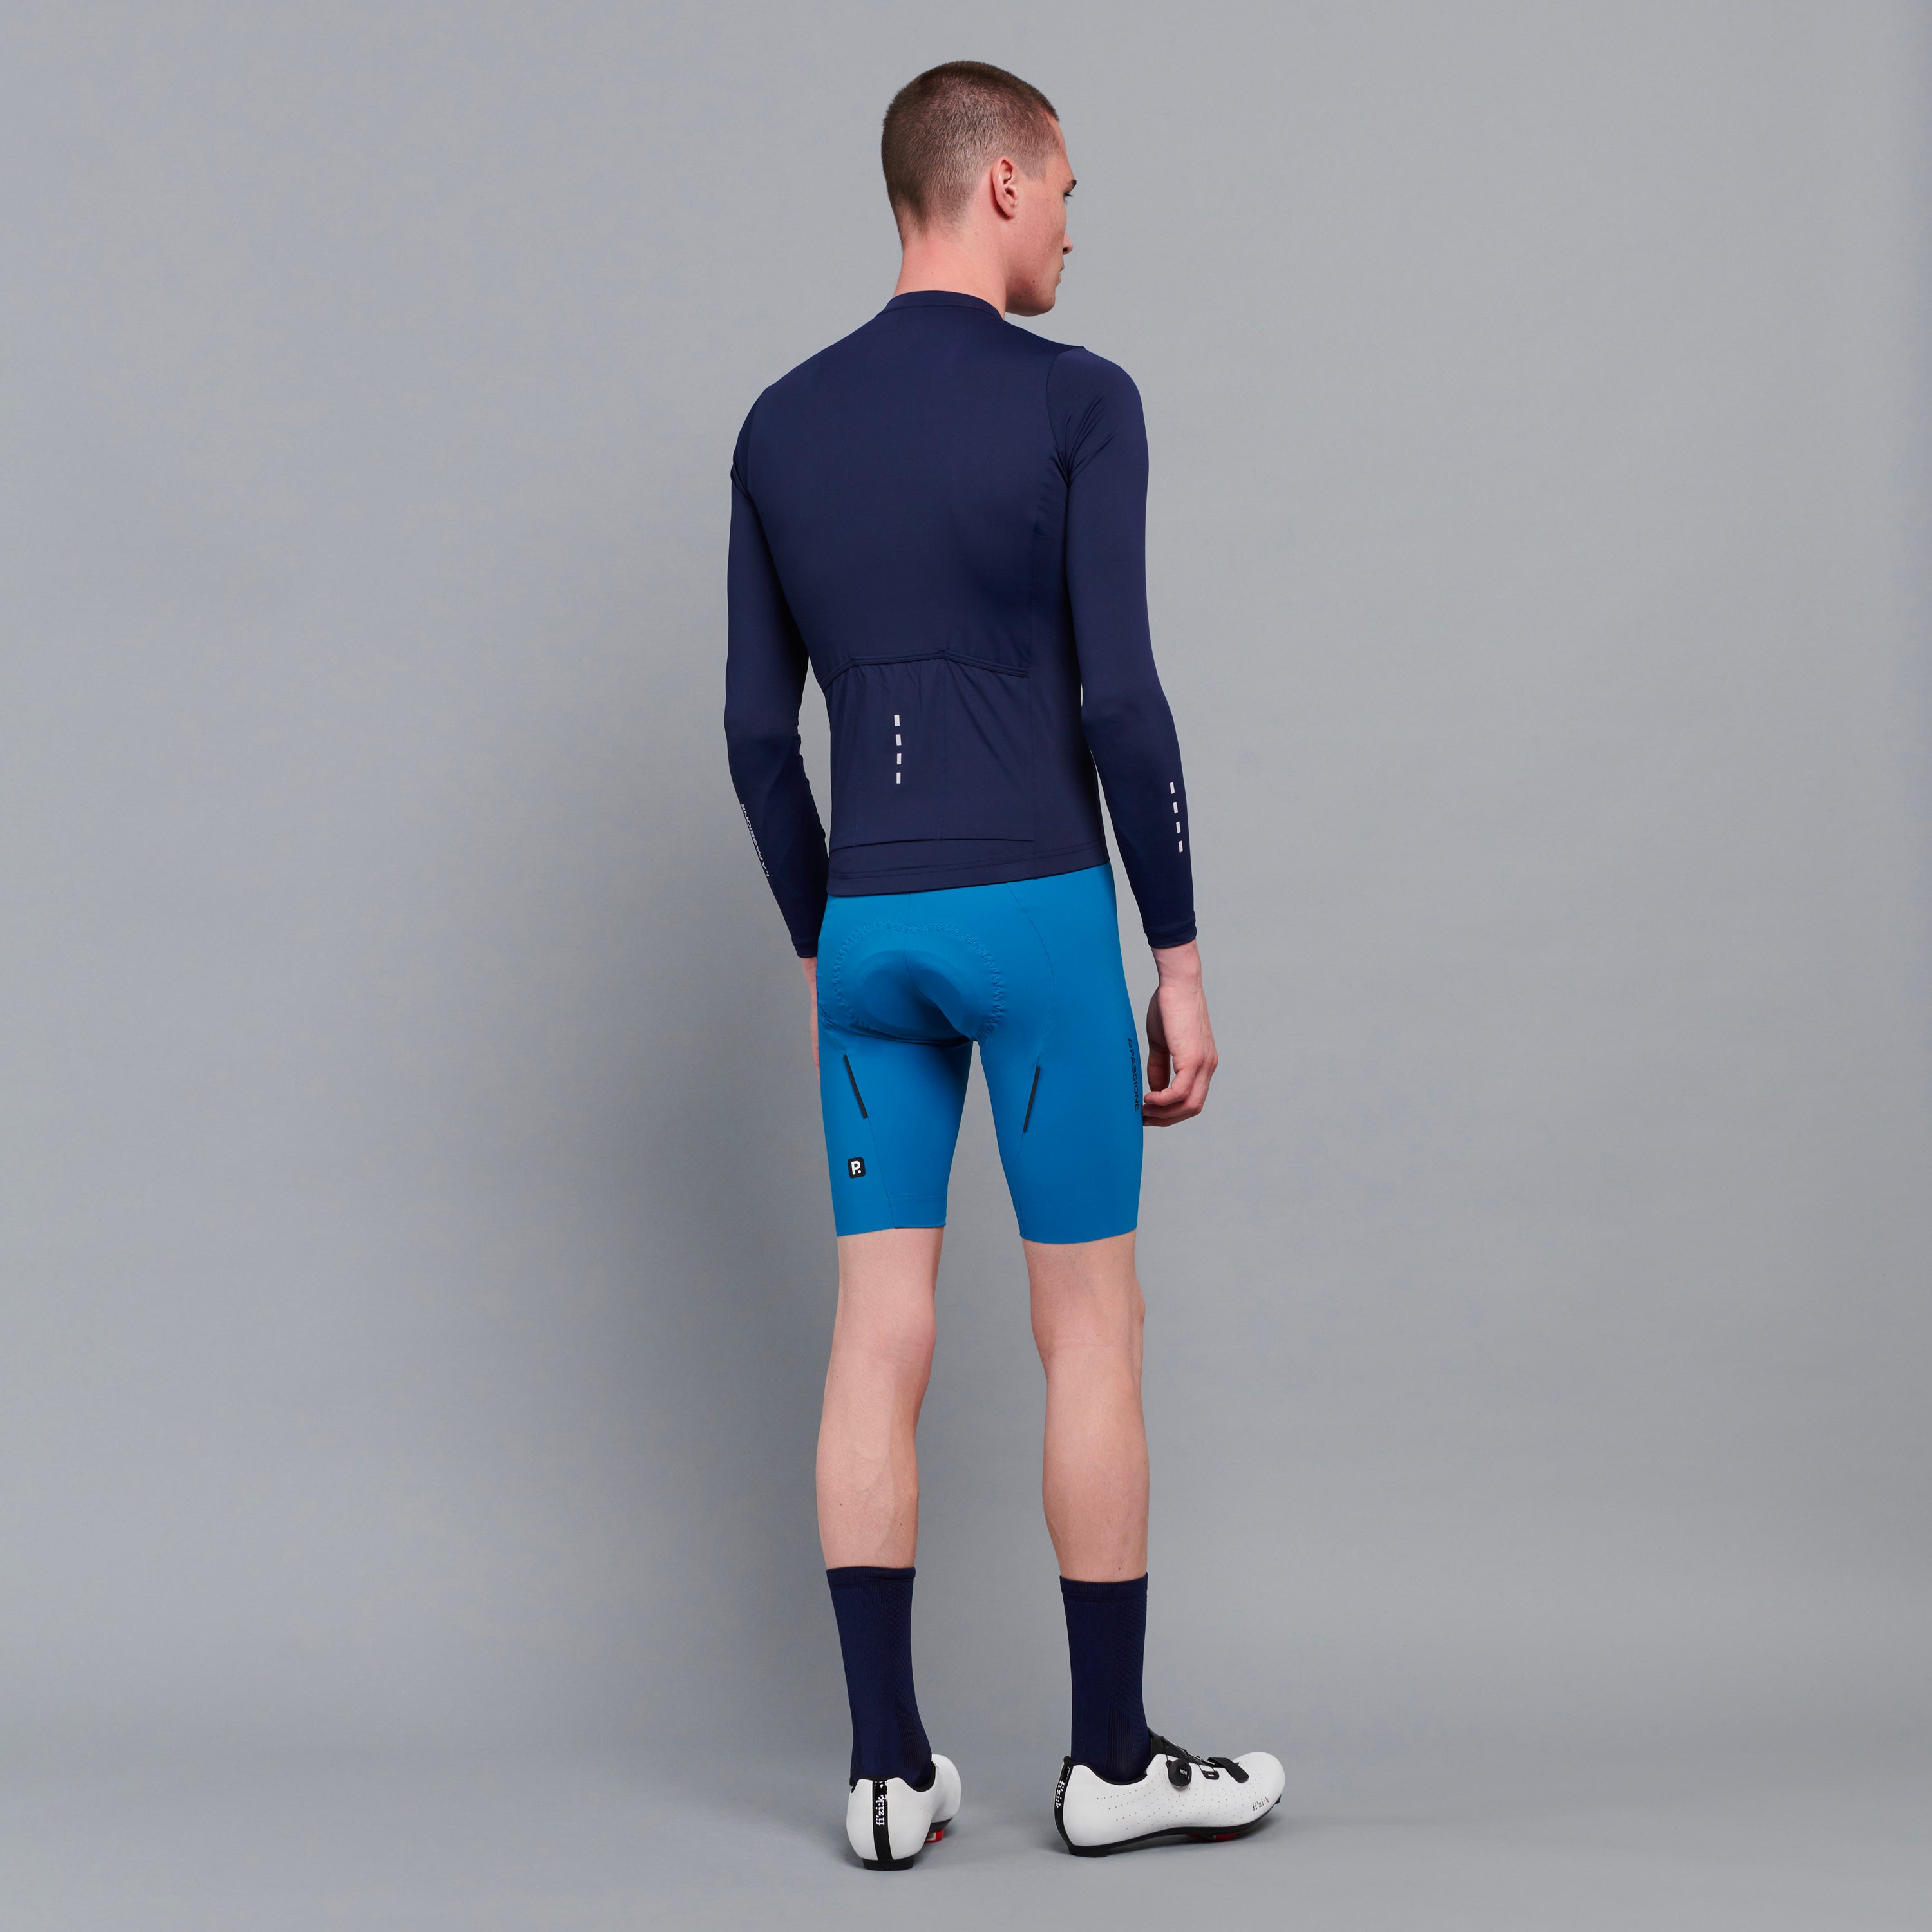 Dreamer Bib Shorts Iron Grey  Men's Cycling Clothing La Passione – La  Passione Cycling Couture